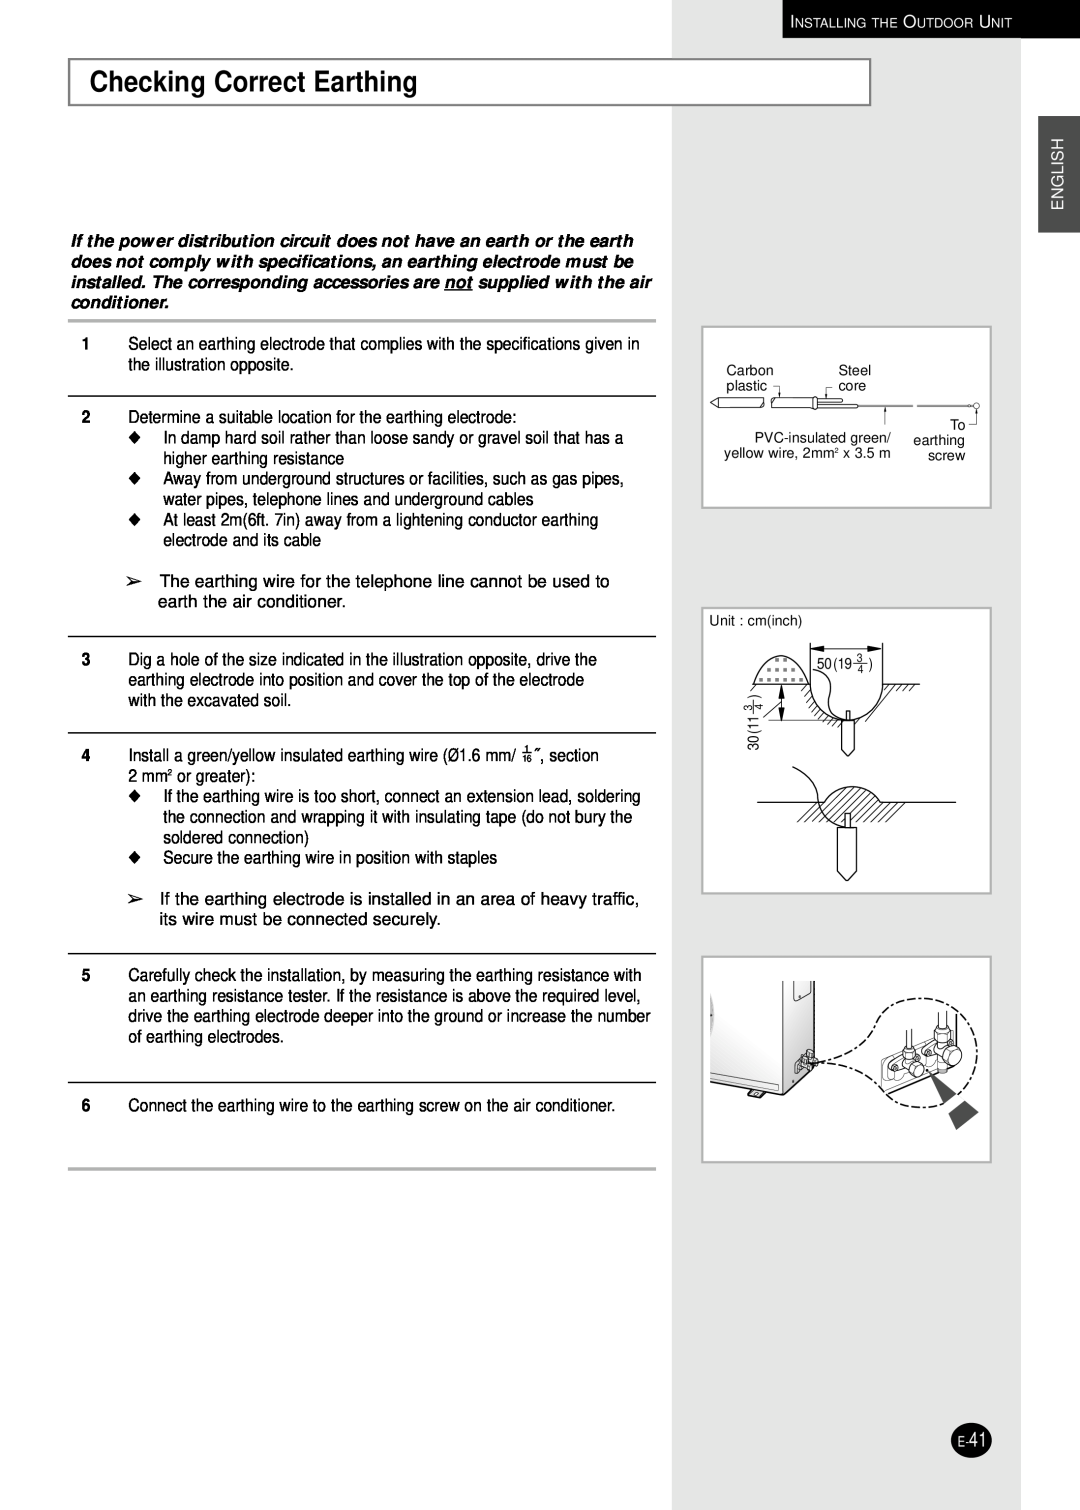 Samsung AQ30C1(2)BC installation manual Checking Correct Earthing, English 